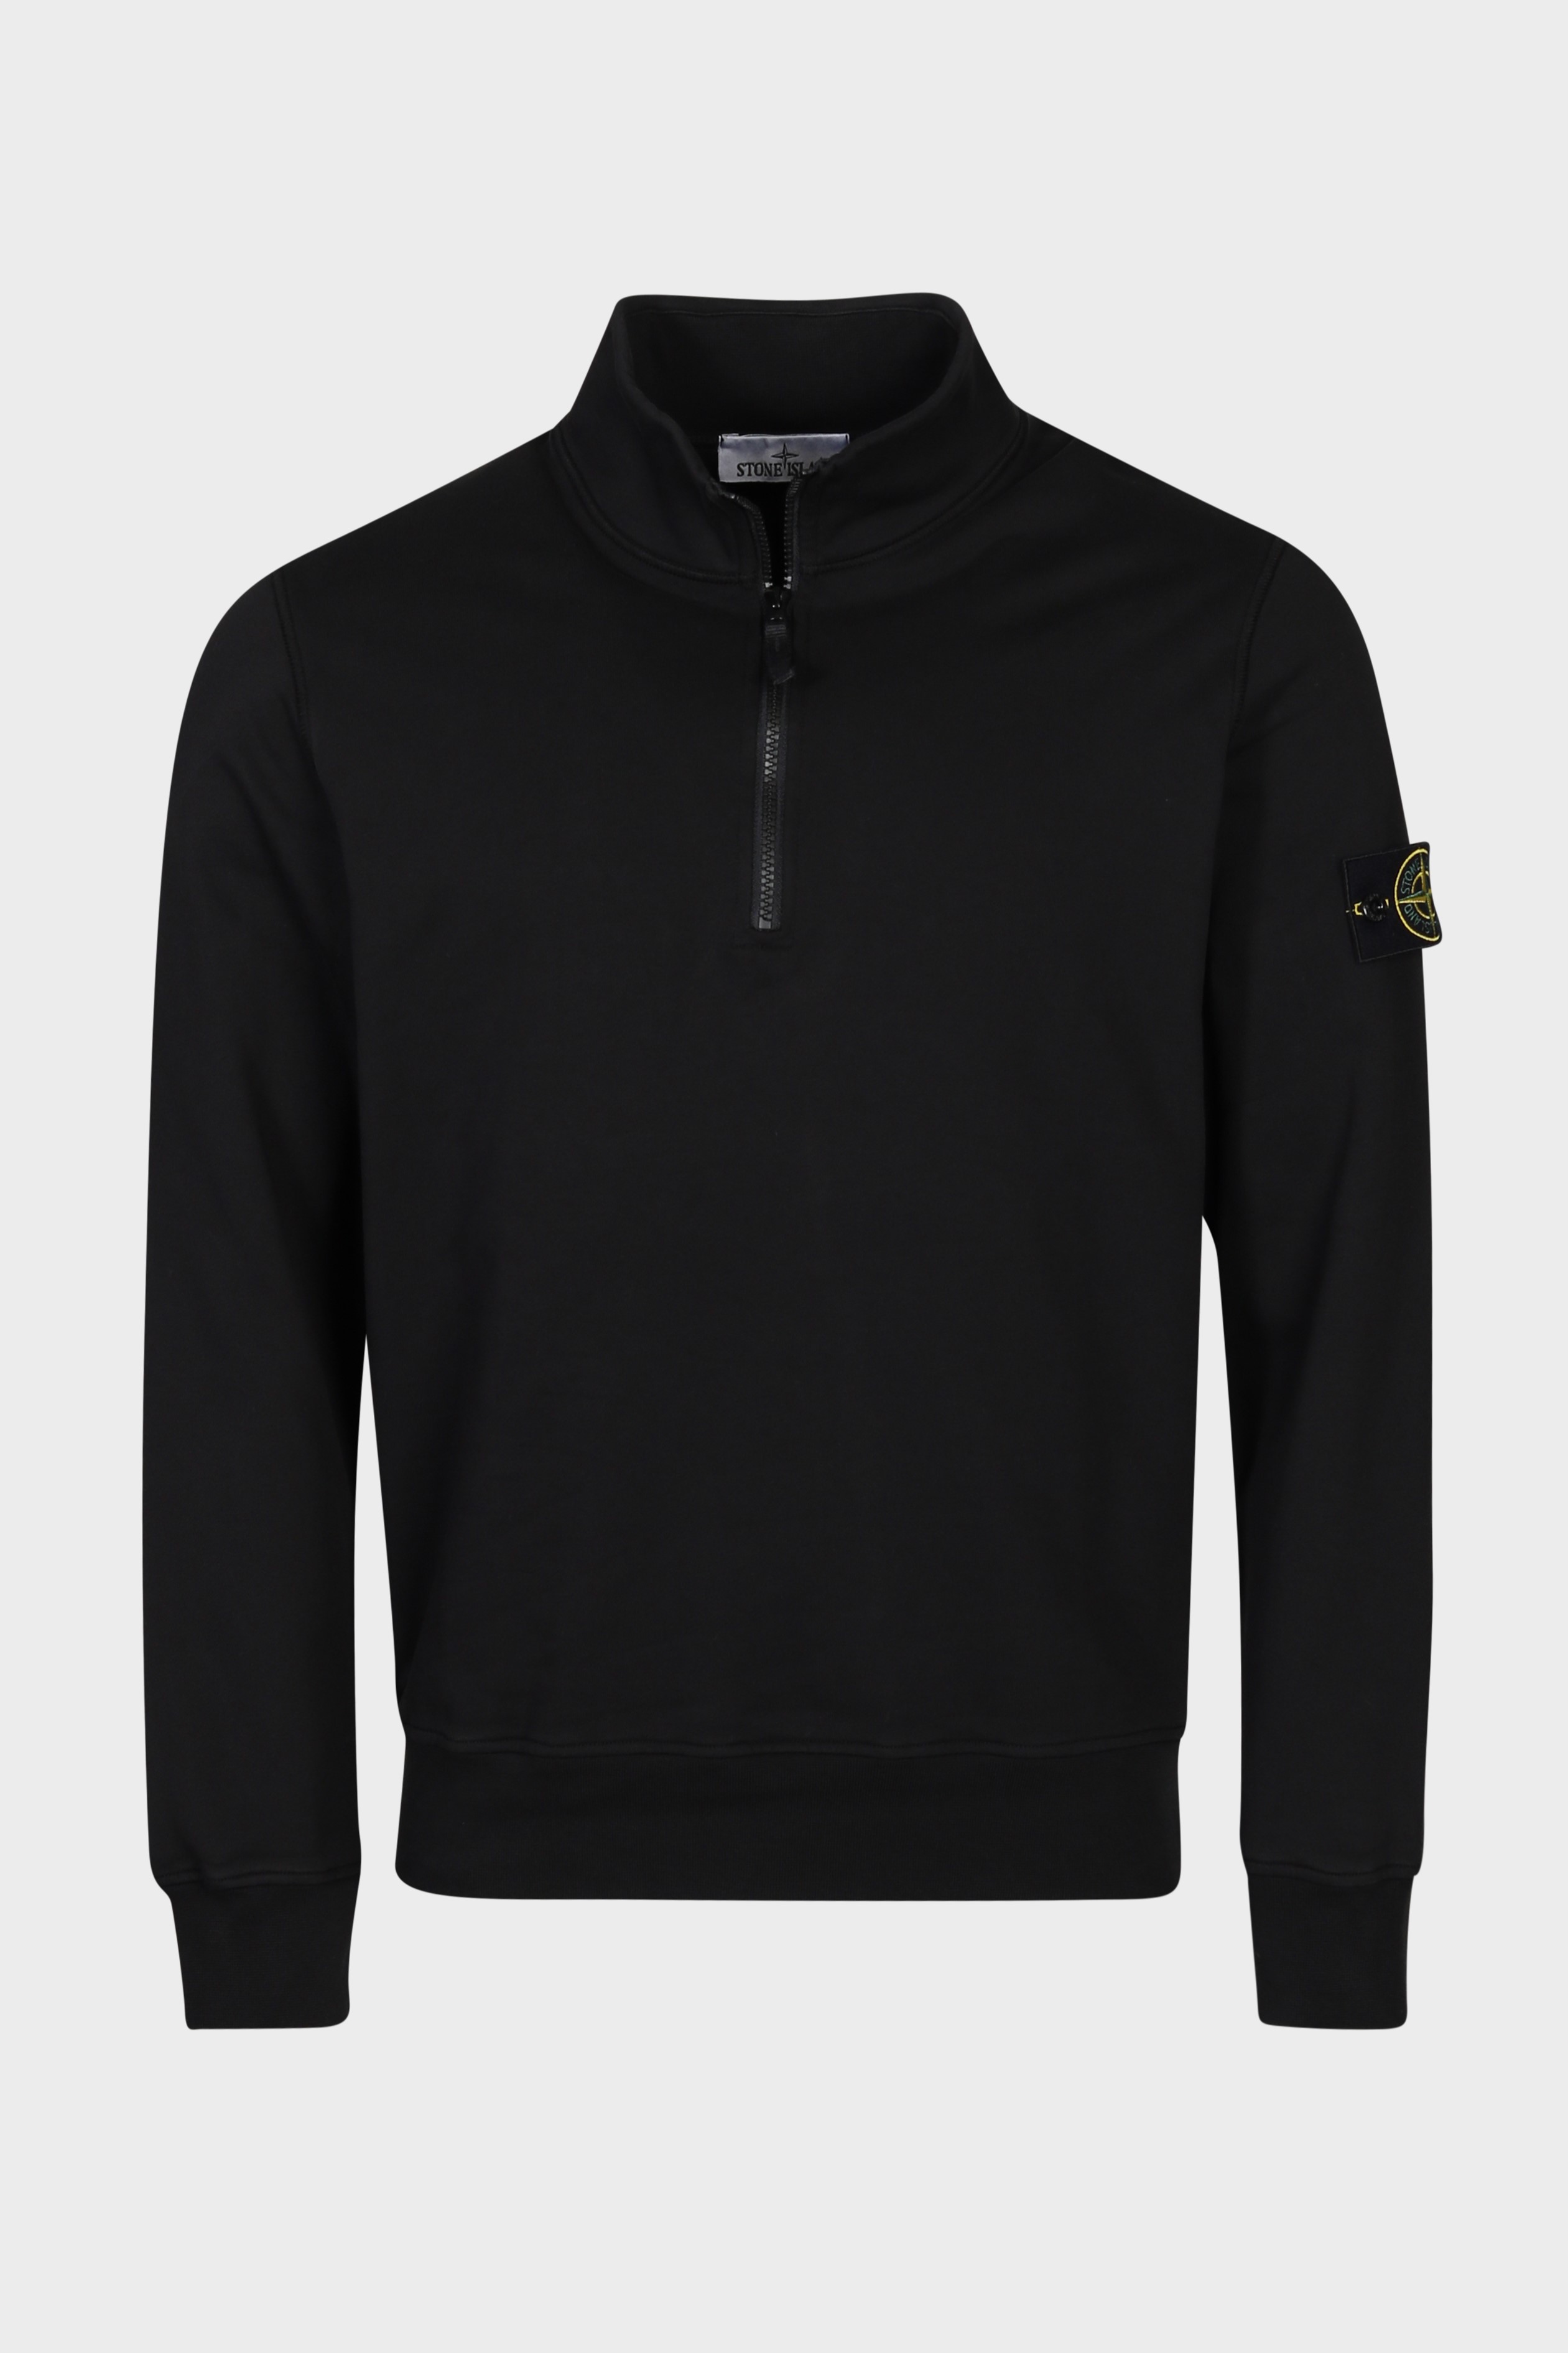 STONE ISLAND Half Zip Sweatshirt in Black 3XL